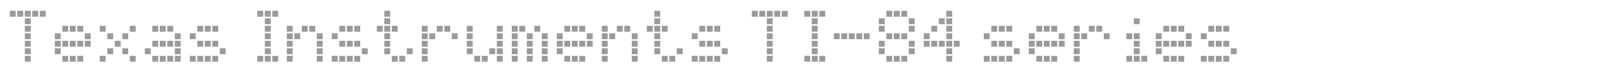 Font Texas Instruments TI-84 series PIXELLATED